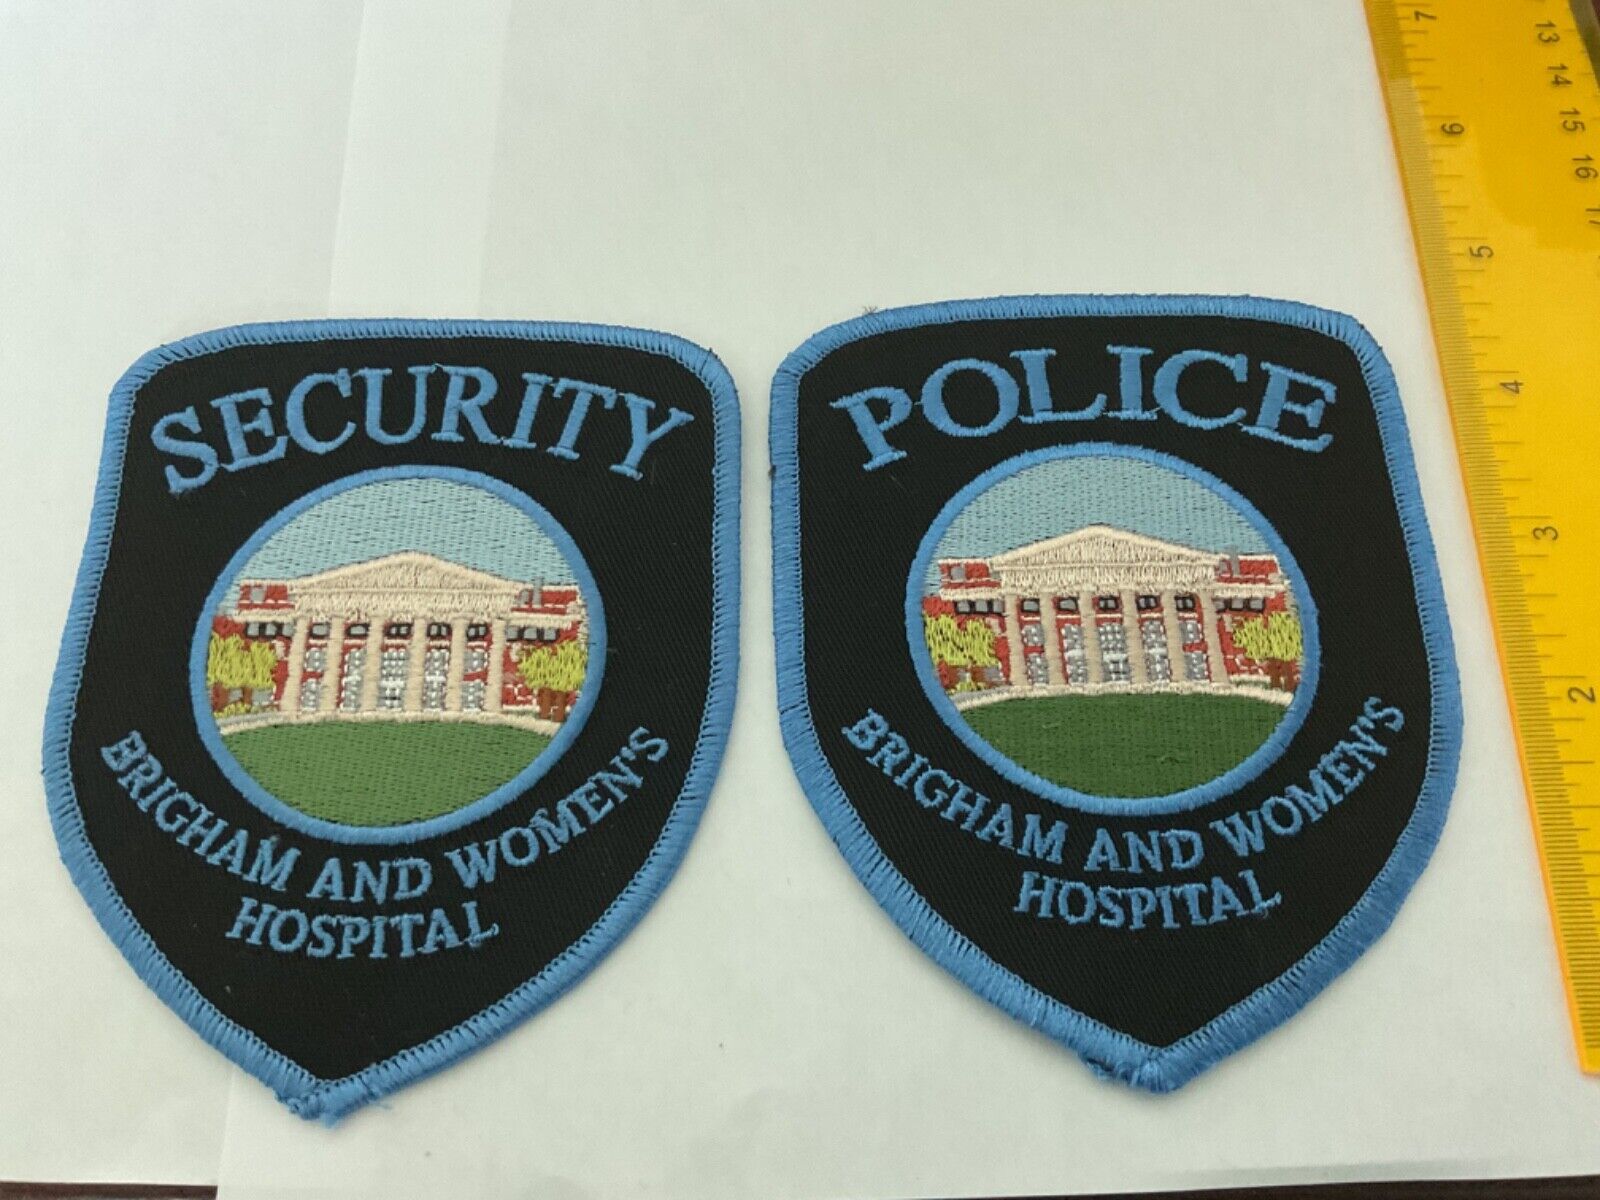 Brigham And Women’s Hospital Massachusetts Law Enforcement collectors patch set